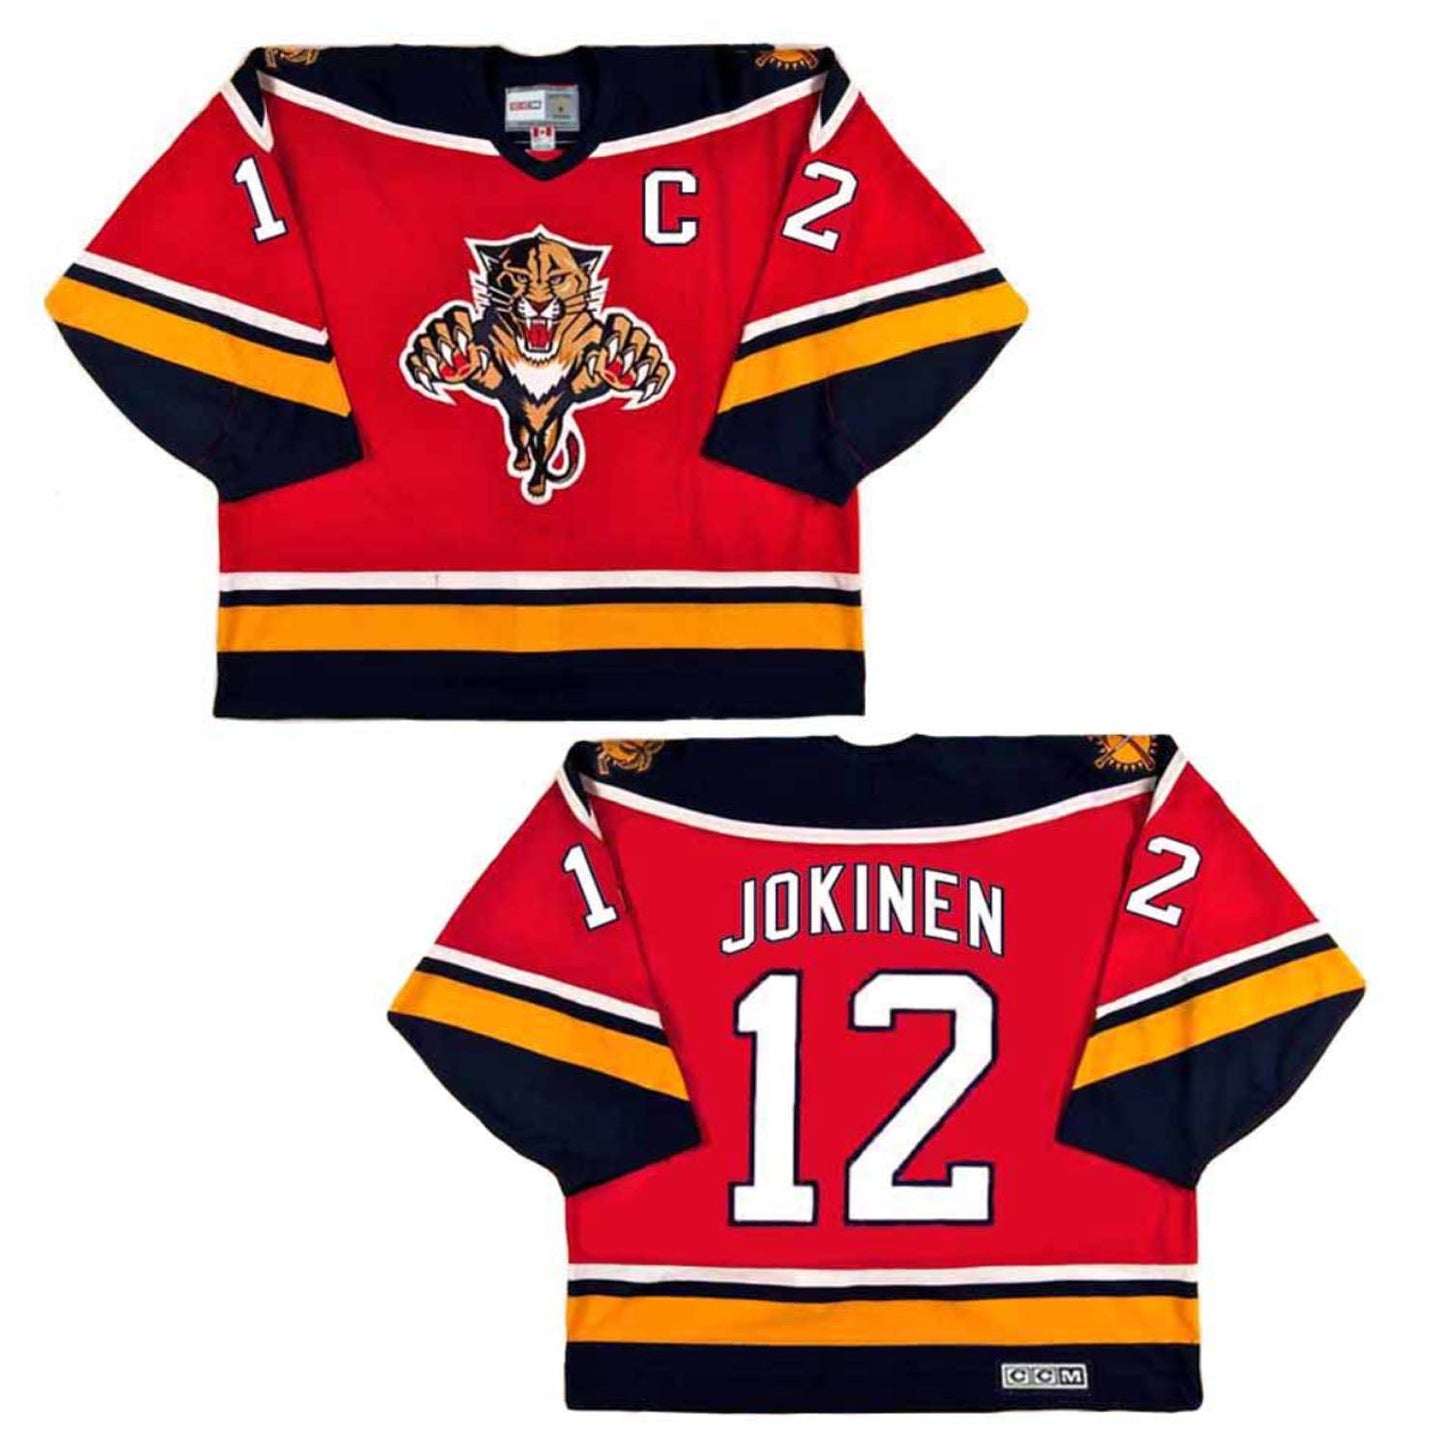 NHL Olli Jokinen Florida Panthers 12 Jersey